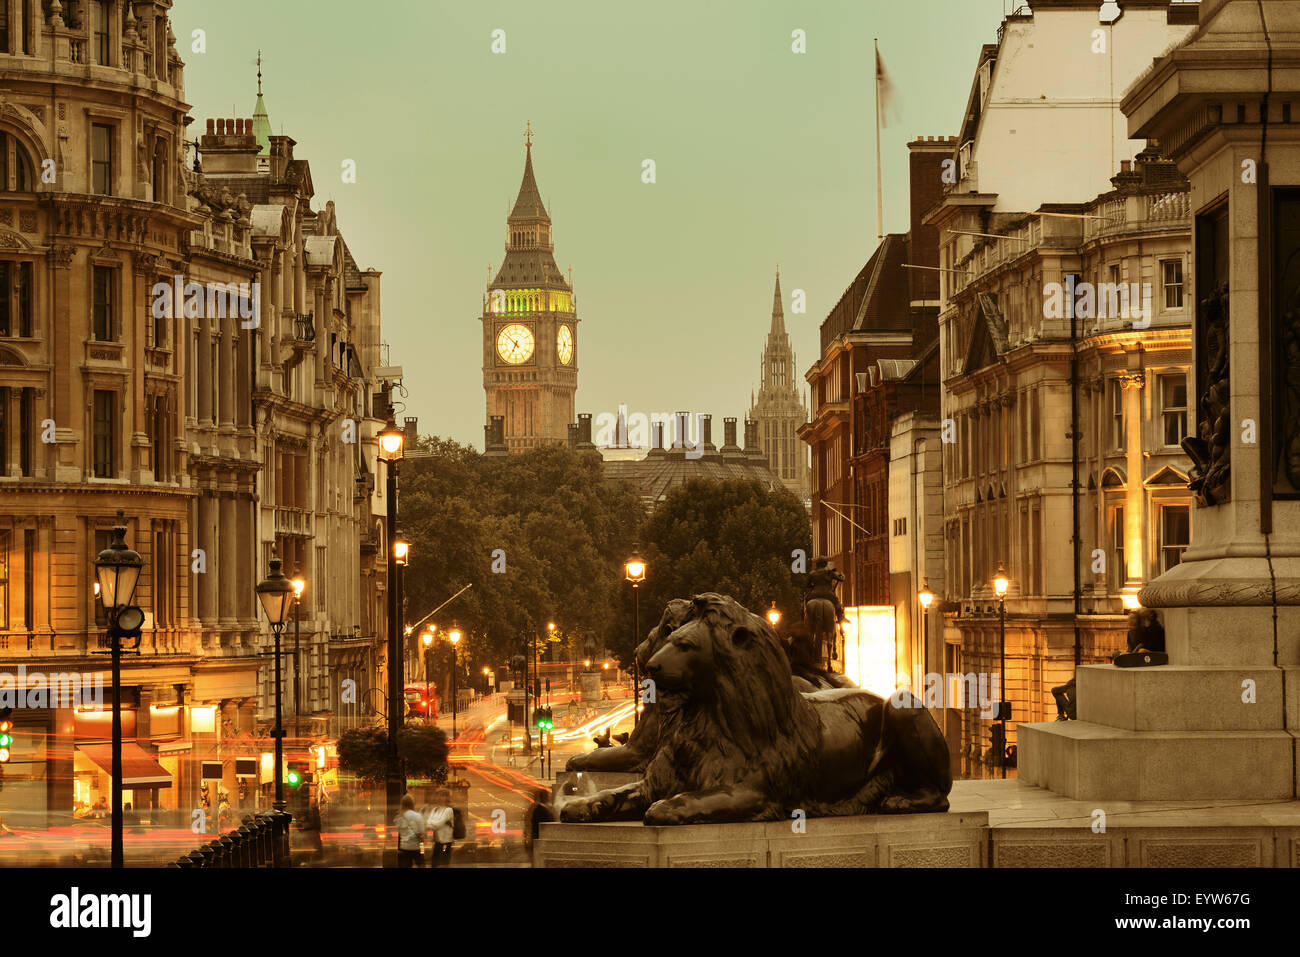 Street view of Trafalgar Square at night in London Stock Photo